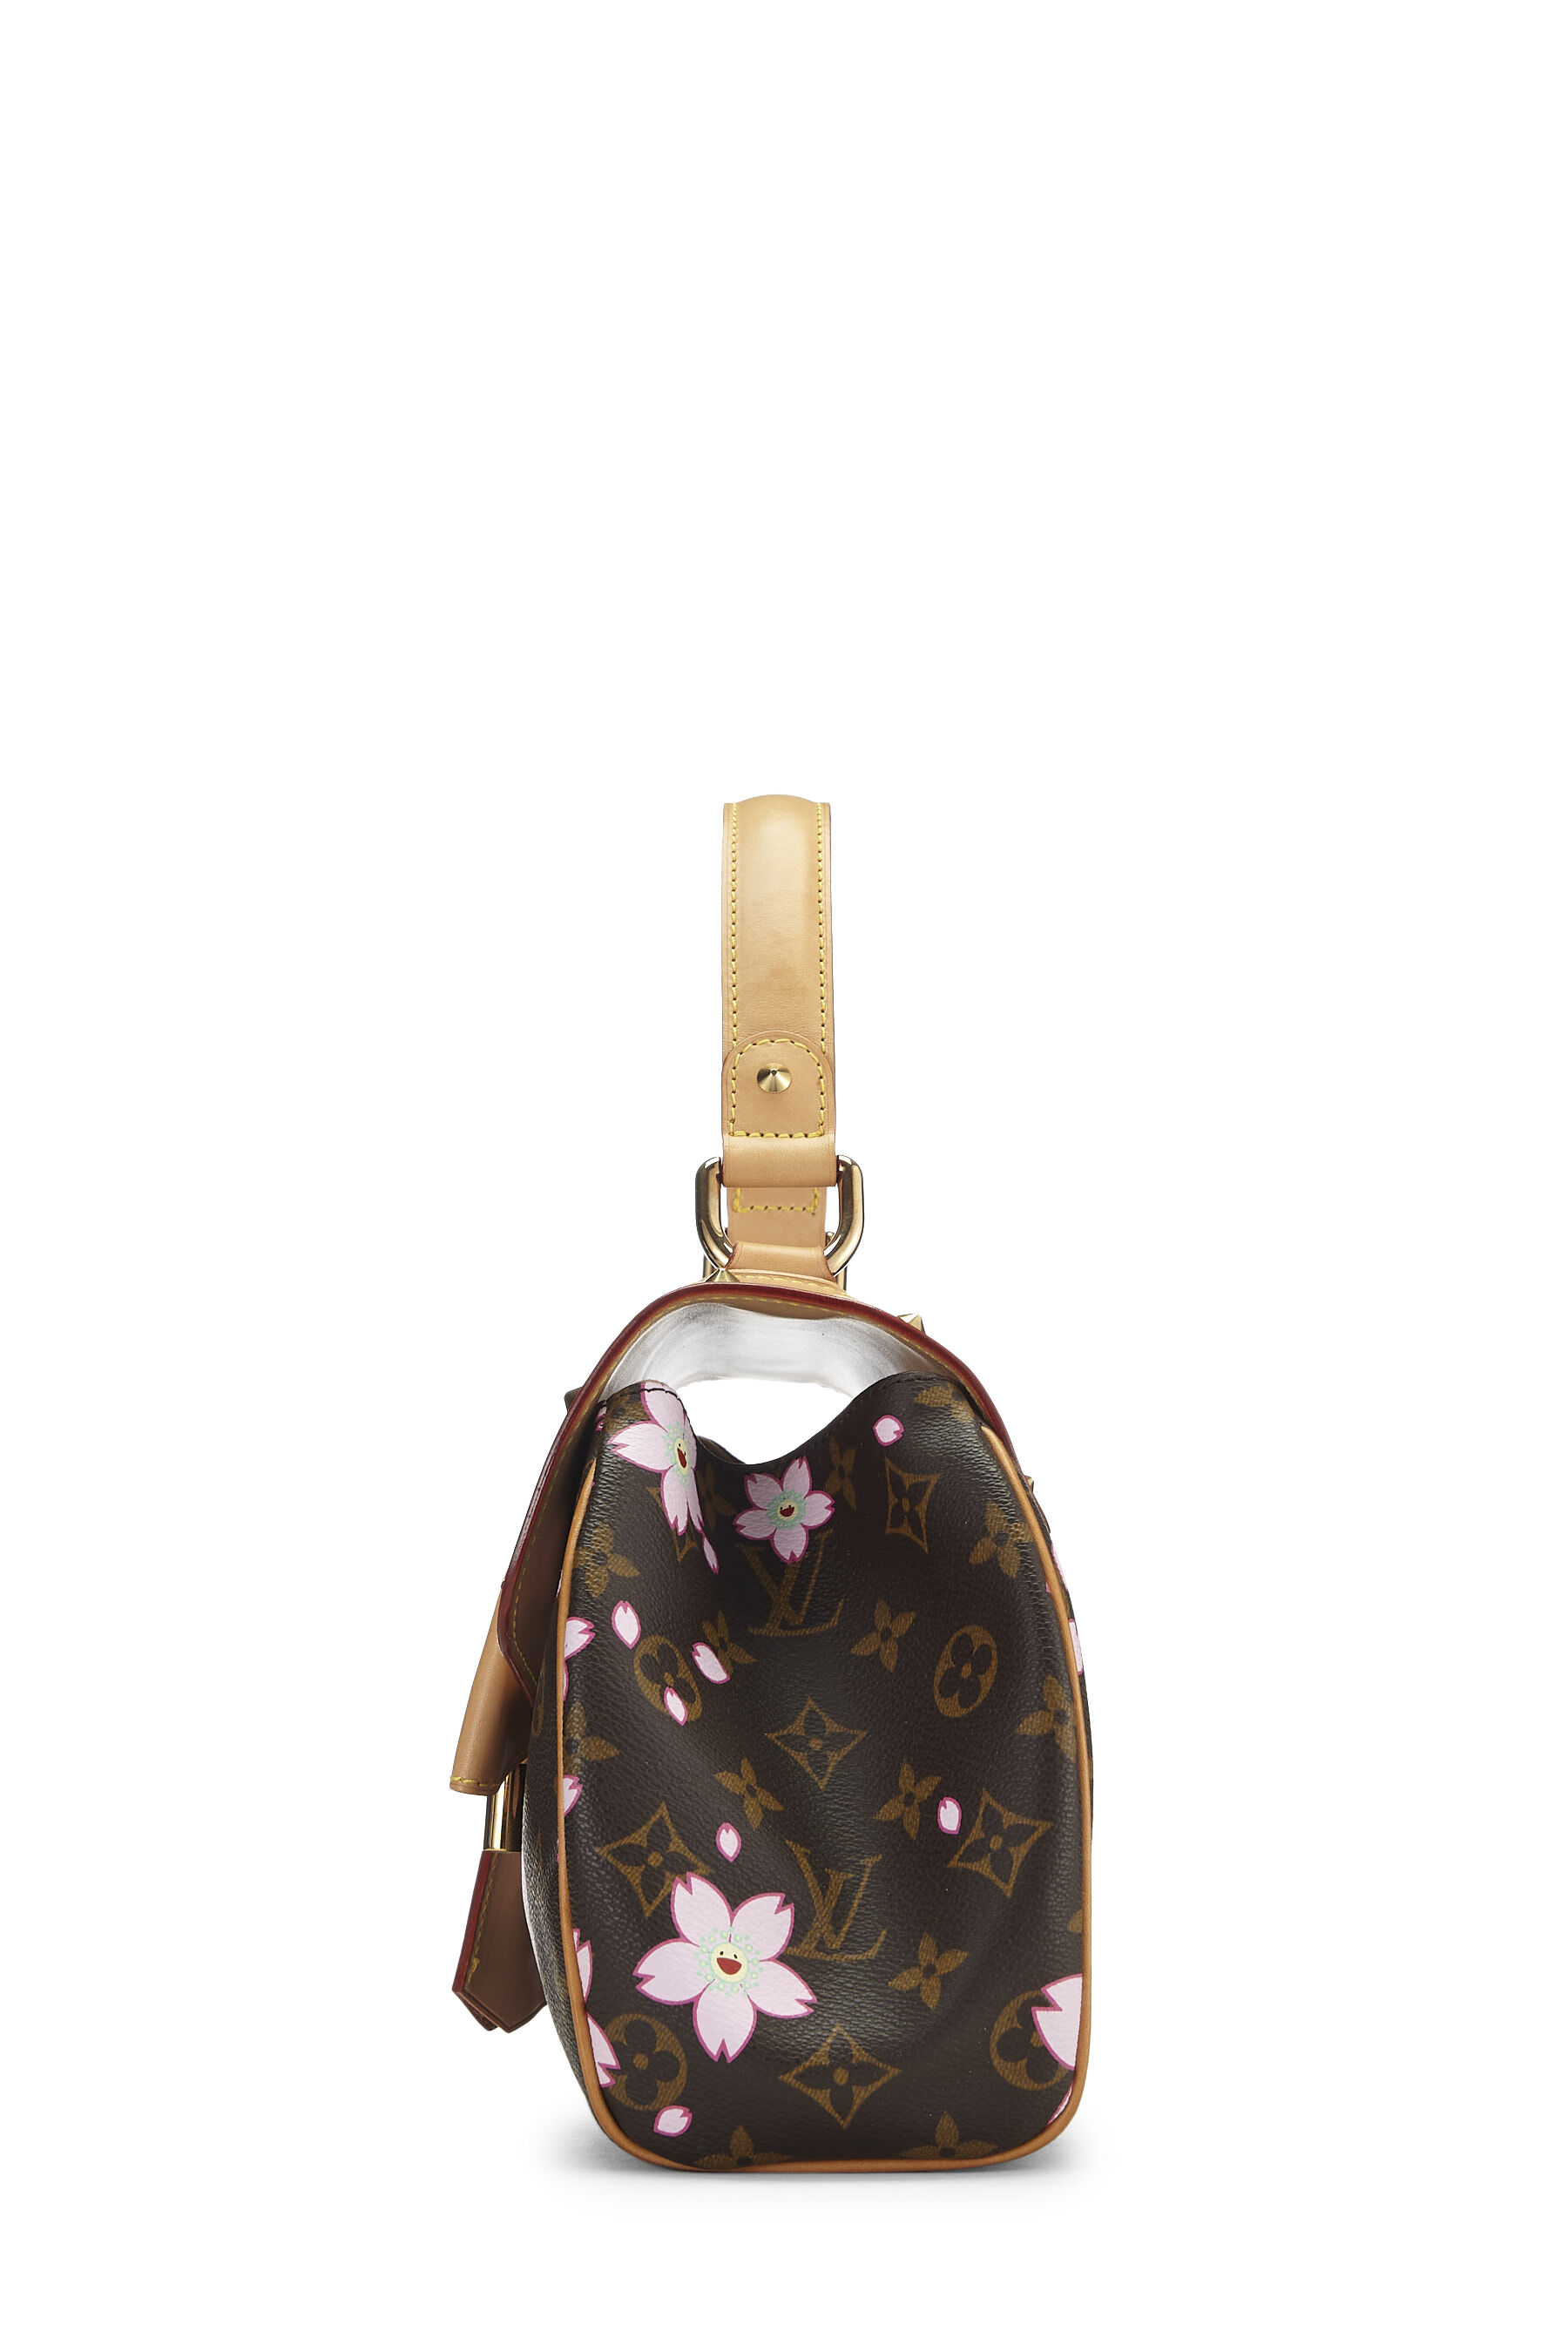 Louis Vuitton x Takashi Murakami Cherry Blossom Sac Retro Bag, myGemma